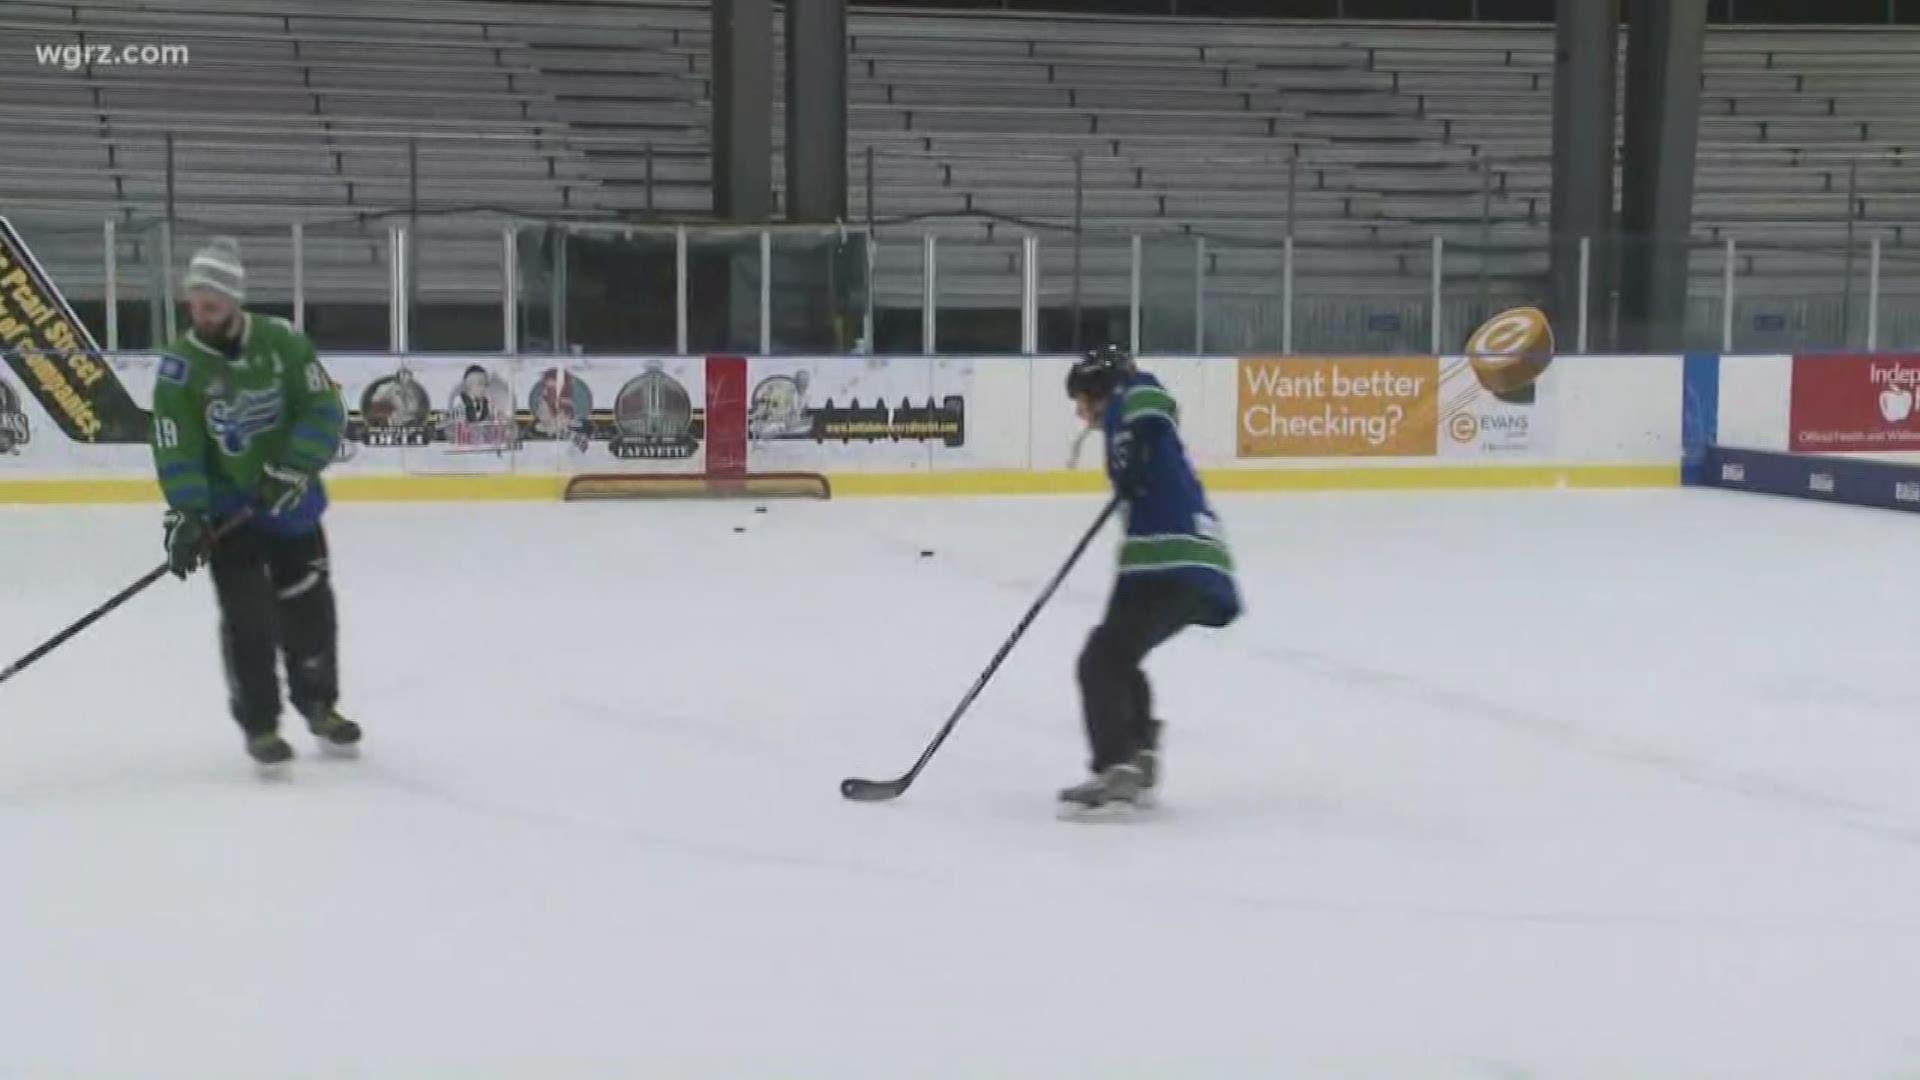 Pond hockey returns to Buffalo this weekend